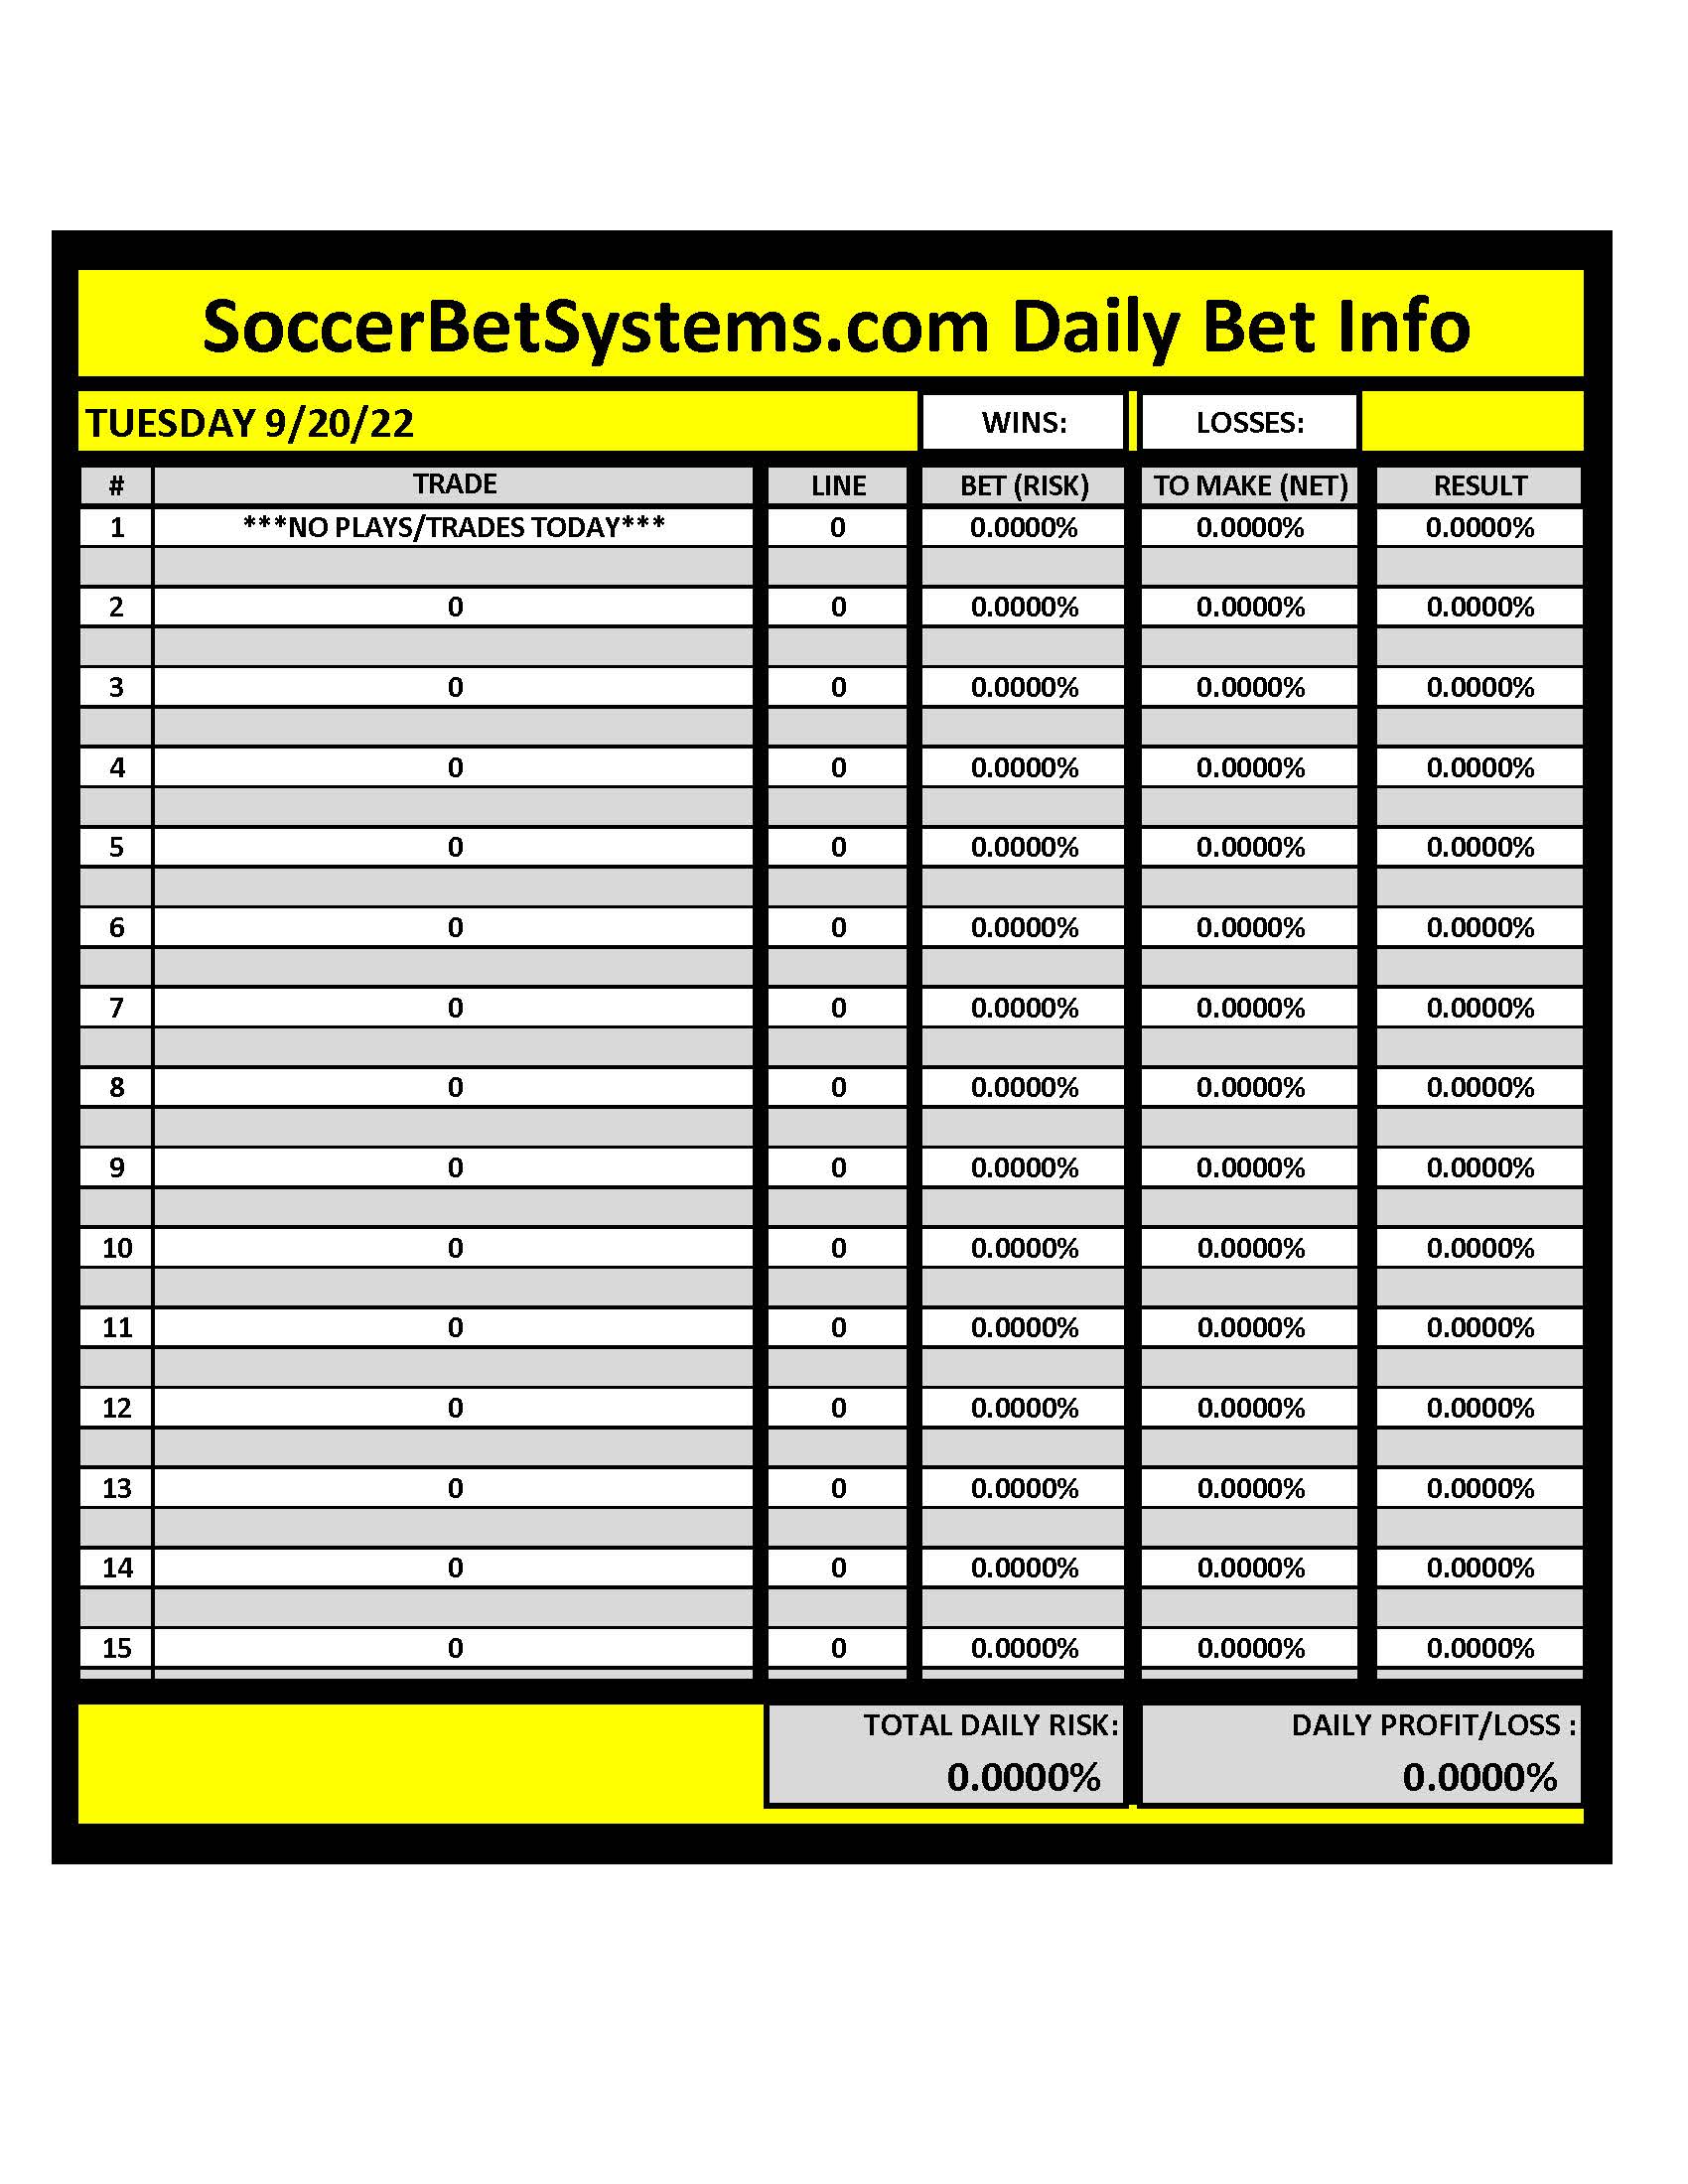 SoccerBetSystems.com 9/20/22 Daily Results